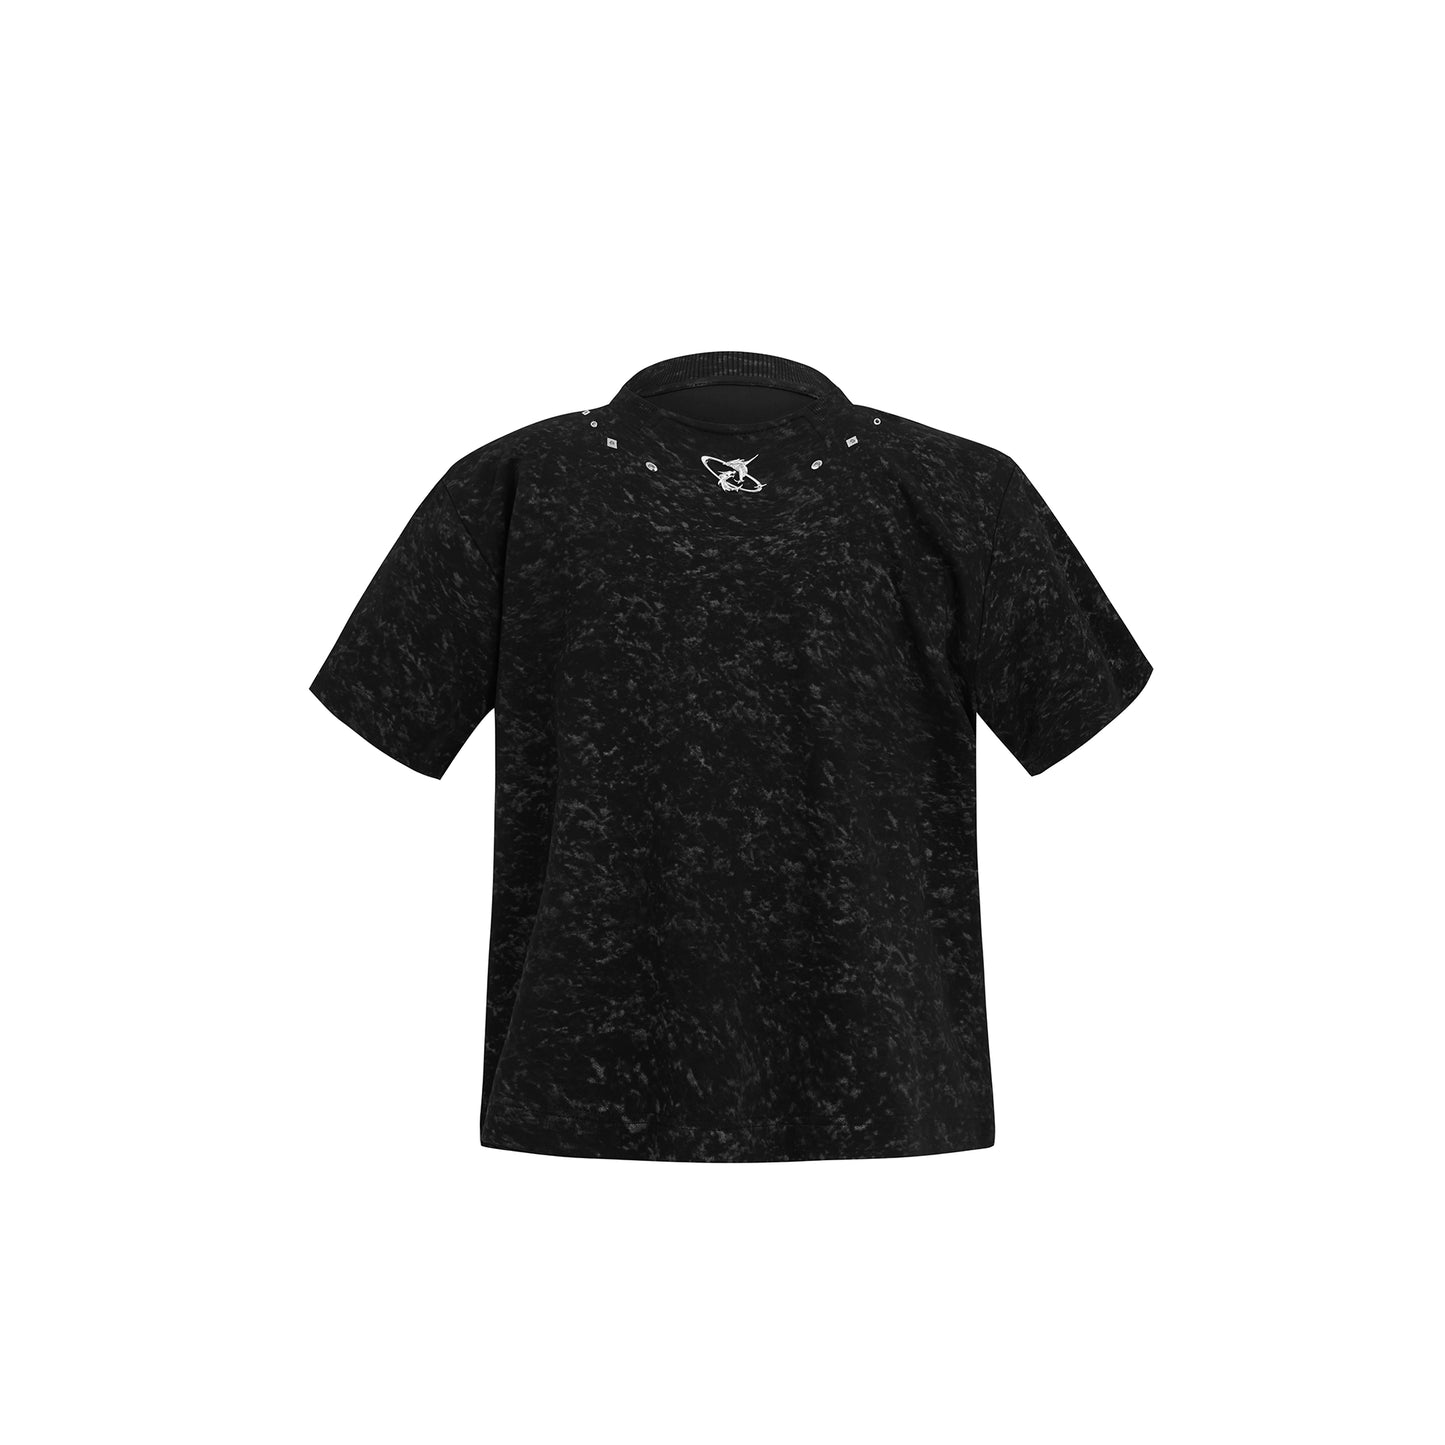 Metal Decoration Tie Dye Shoulder Pad Short Sleeve T-Shirt WN5604